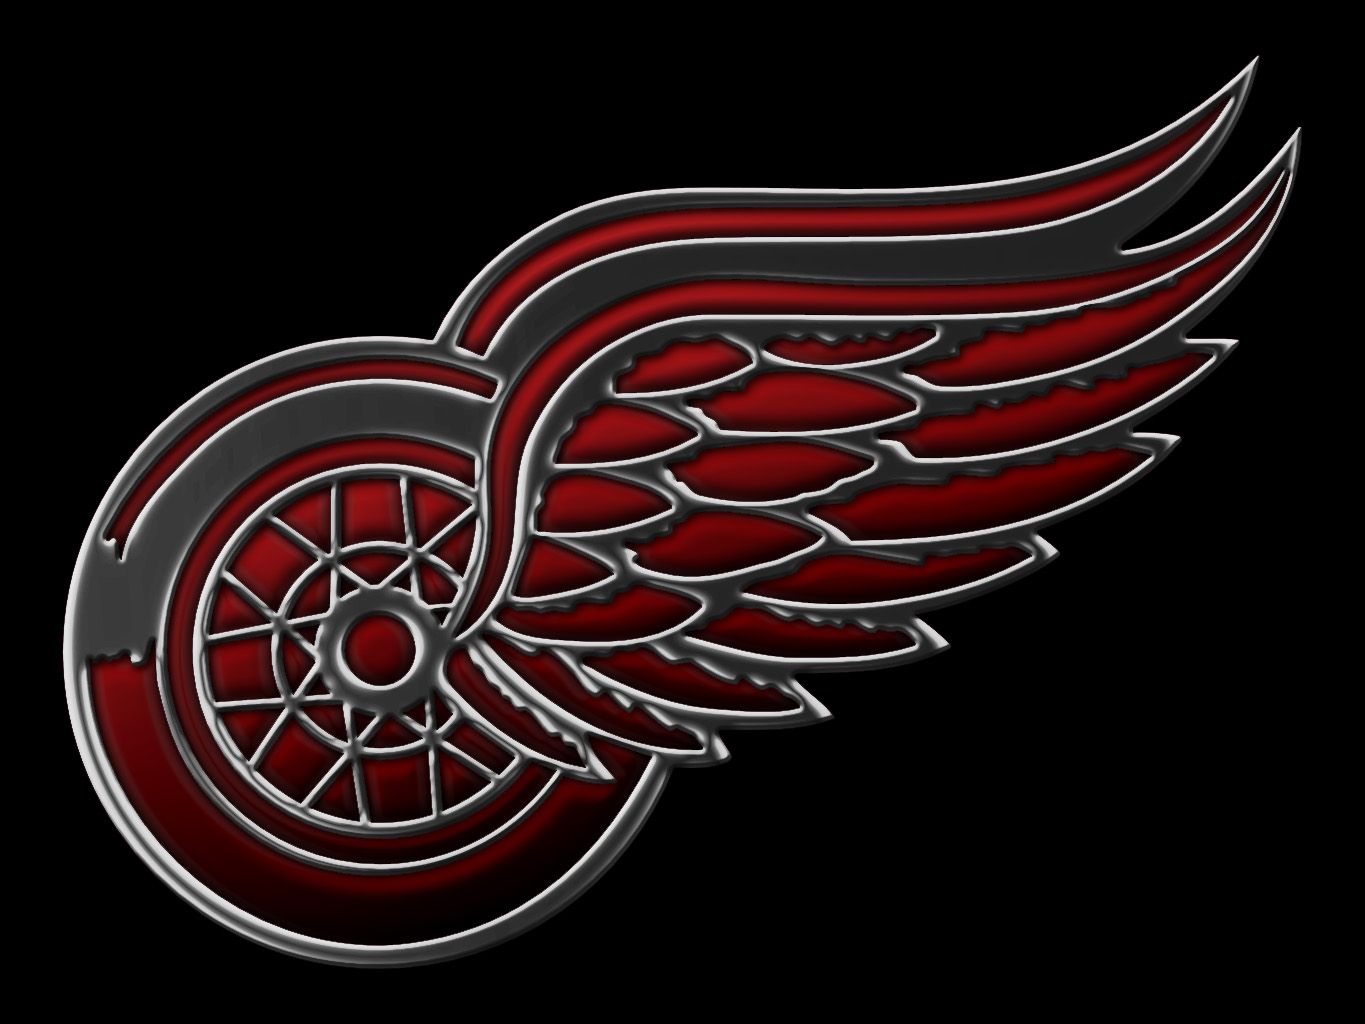 Detroit Red Wings land 4 centers, 2 goalies in 2022 NHL Mock Draft